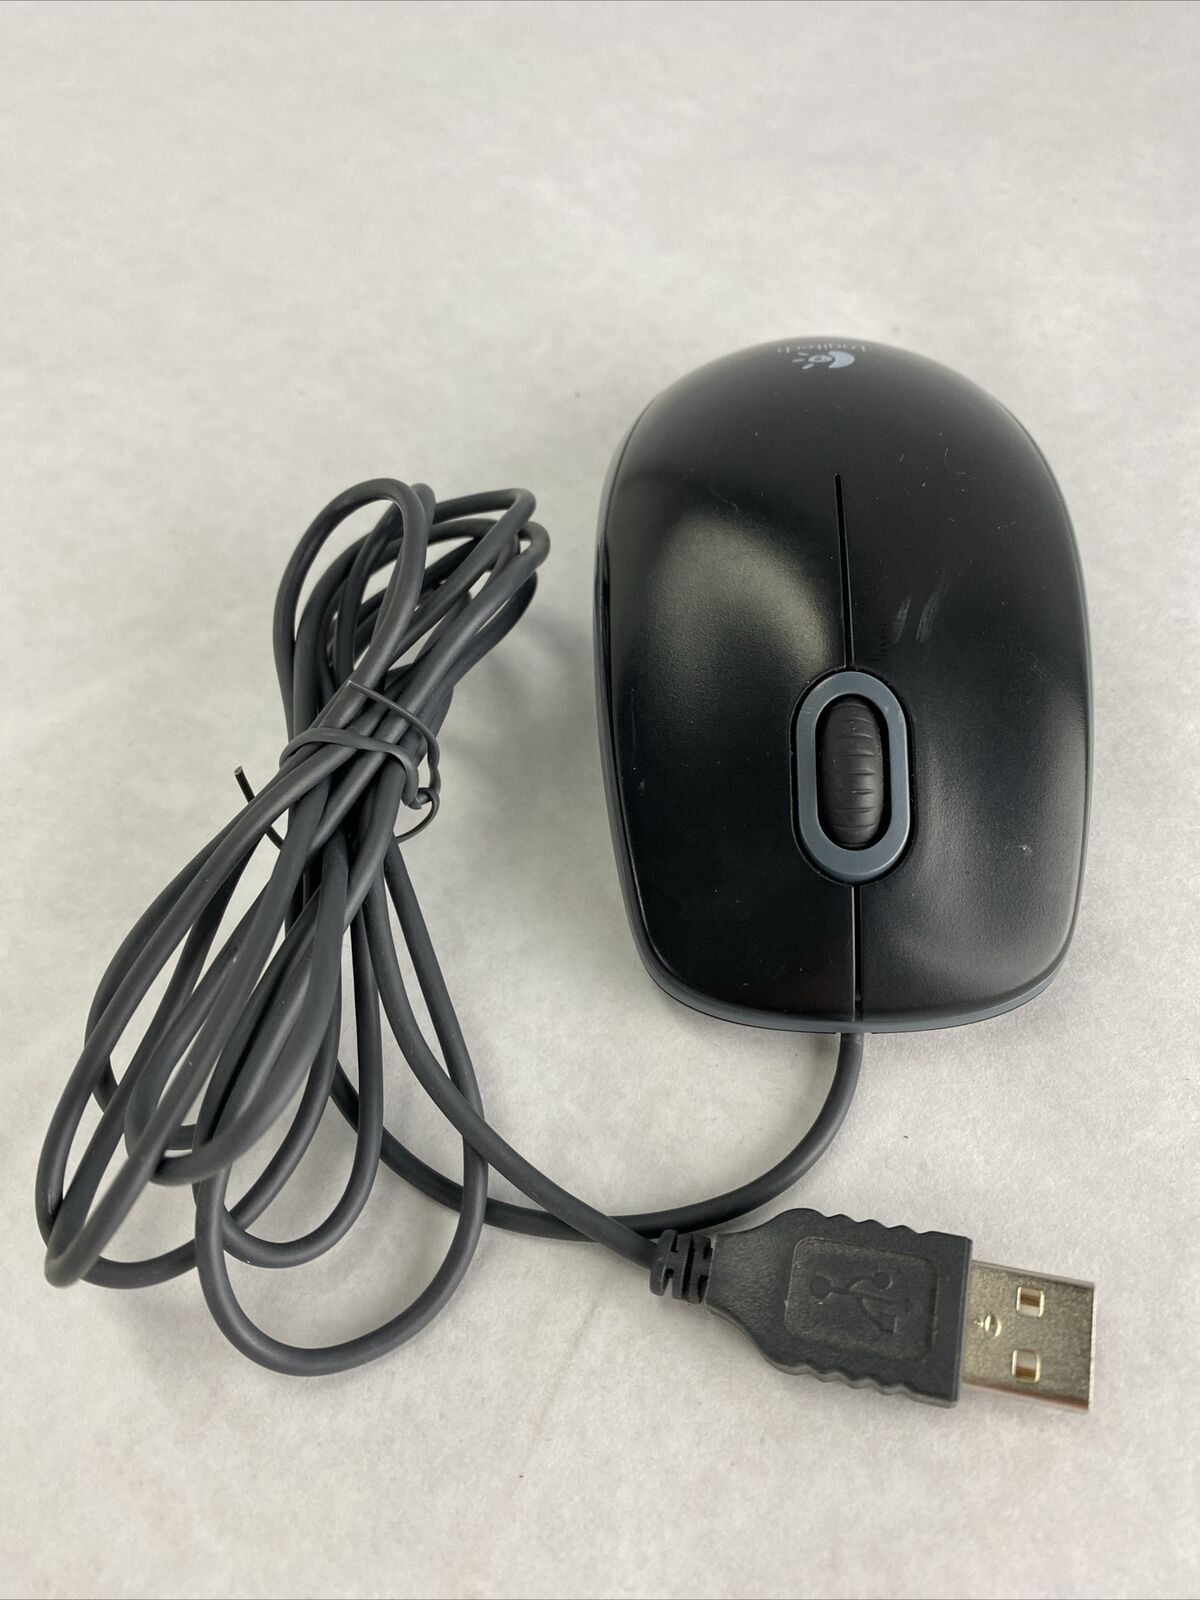 Lot( 3 ) Logitech M-U0026 Optical 6ft Wired USB Scroll Wheel Mouse 810-002182